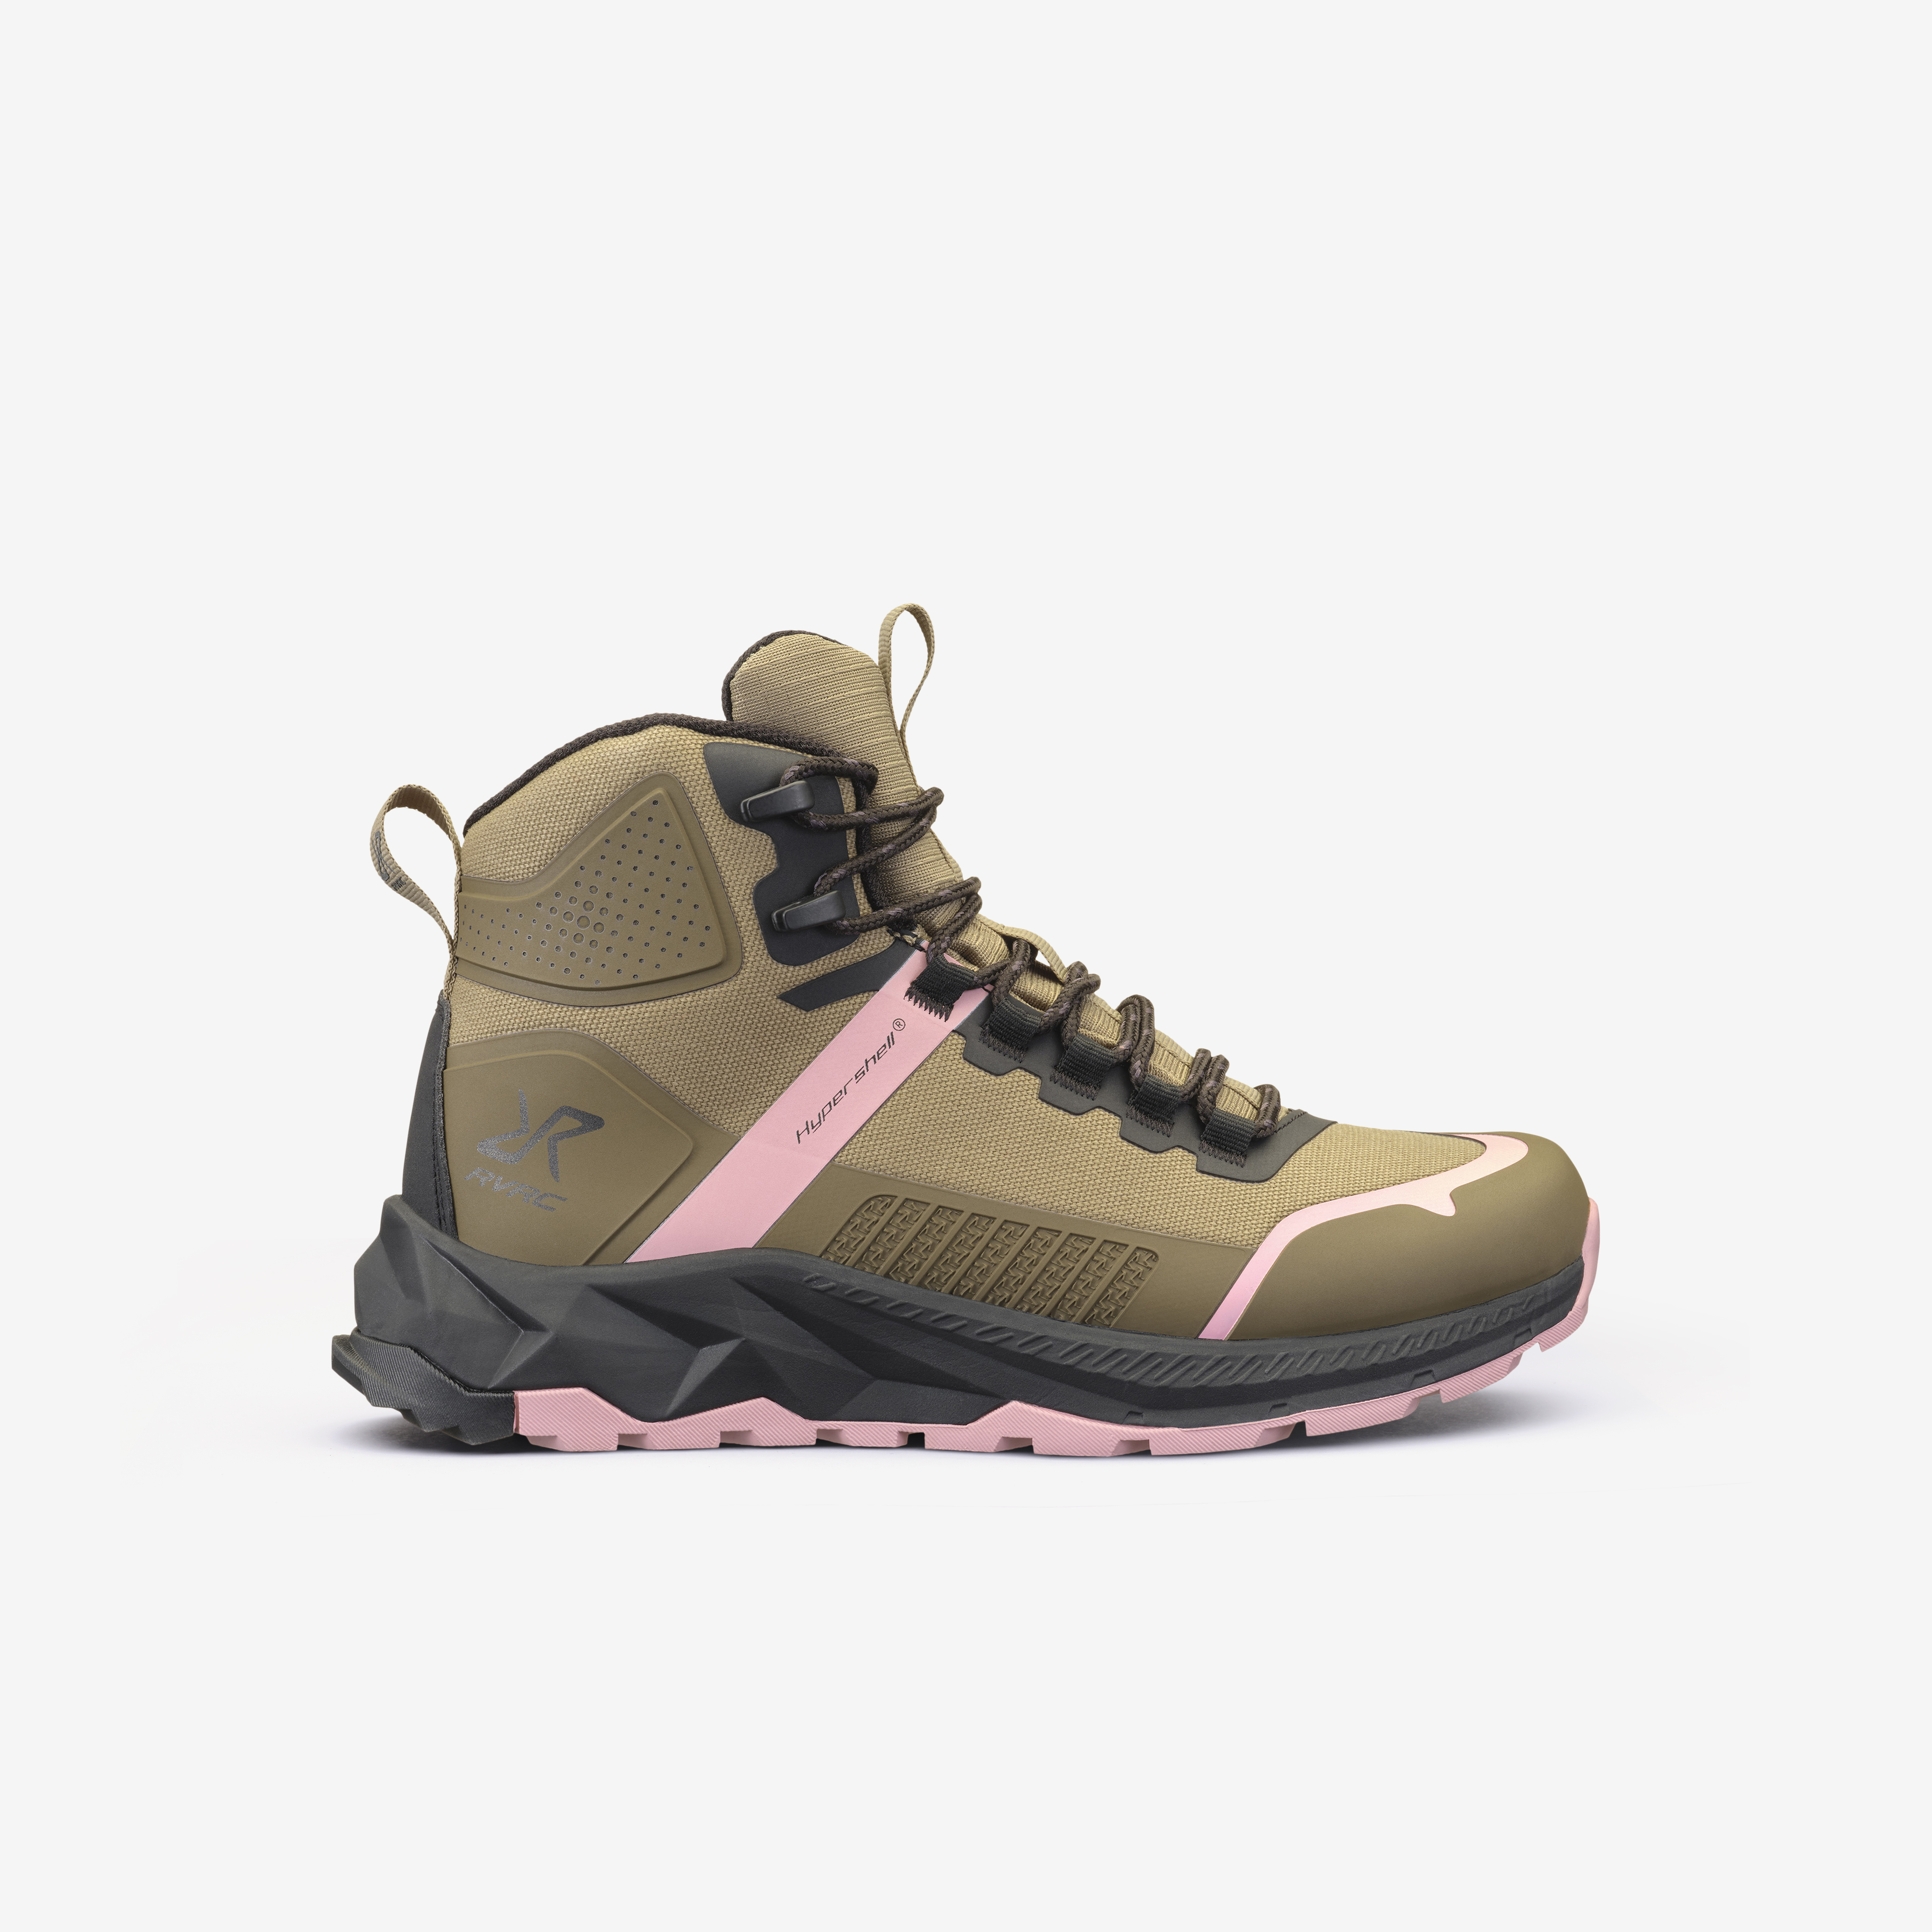 Phantom Trail Mid Waterproof Hiking Boots Khaki/Dusty Pink Femme